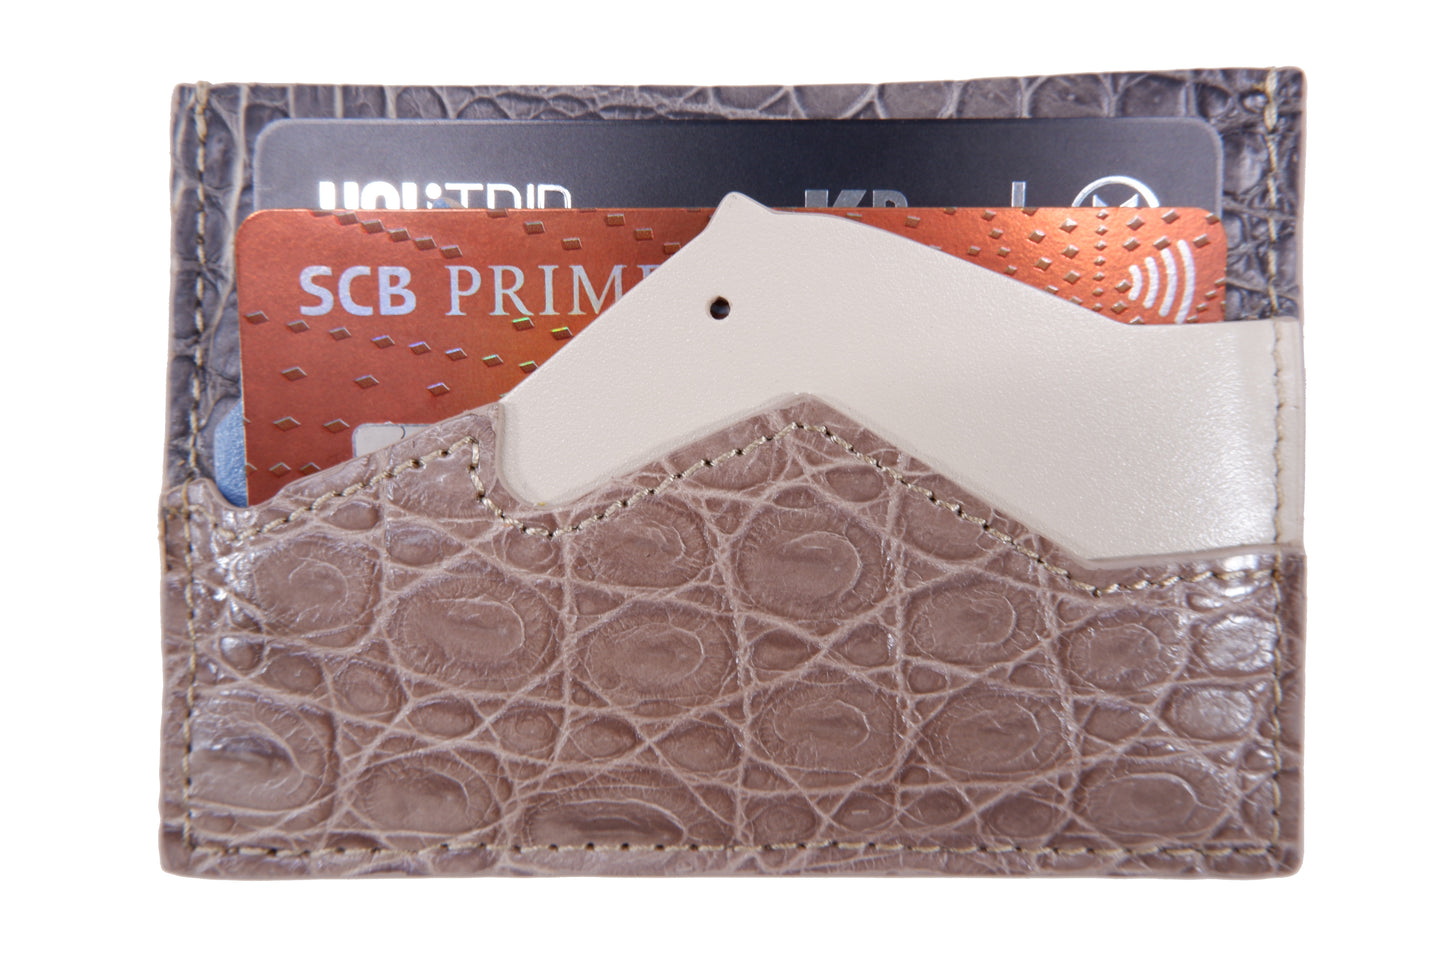 Genuine Crocodile Skin Leather Slim Business & Credit Card Holder Sleeve Wallet with Hidalgo Horse Design